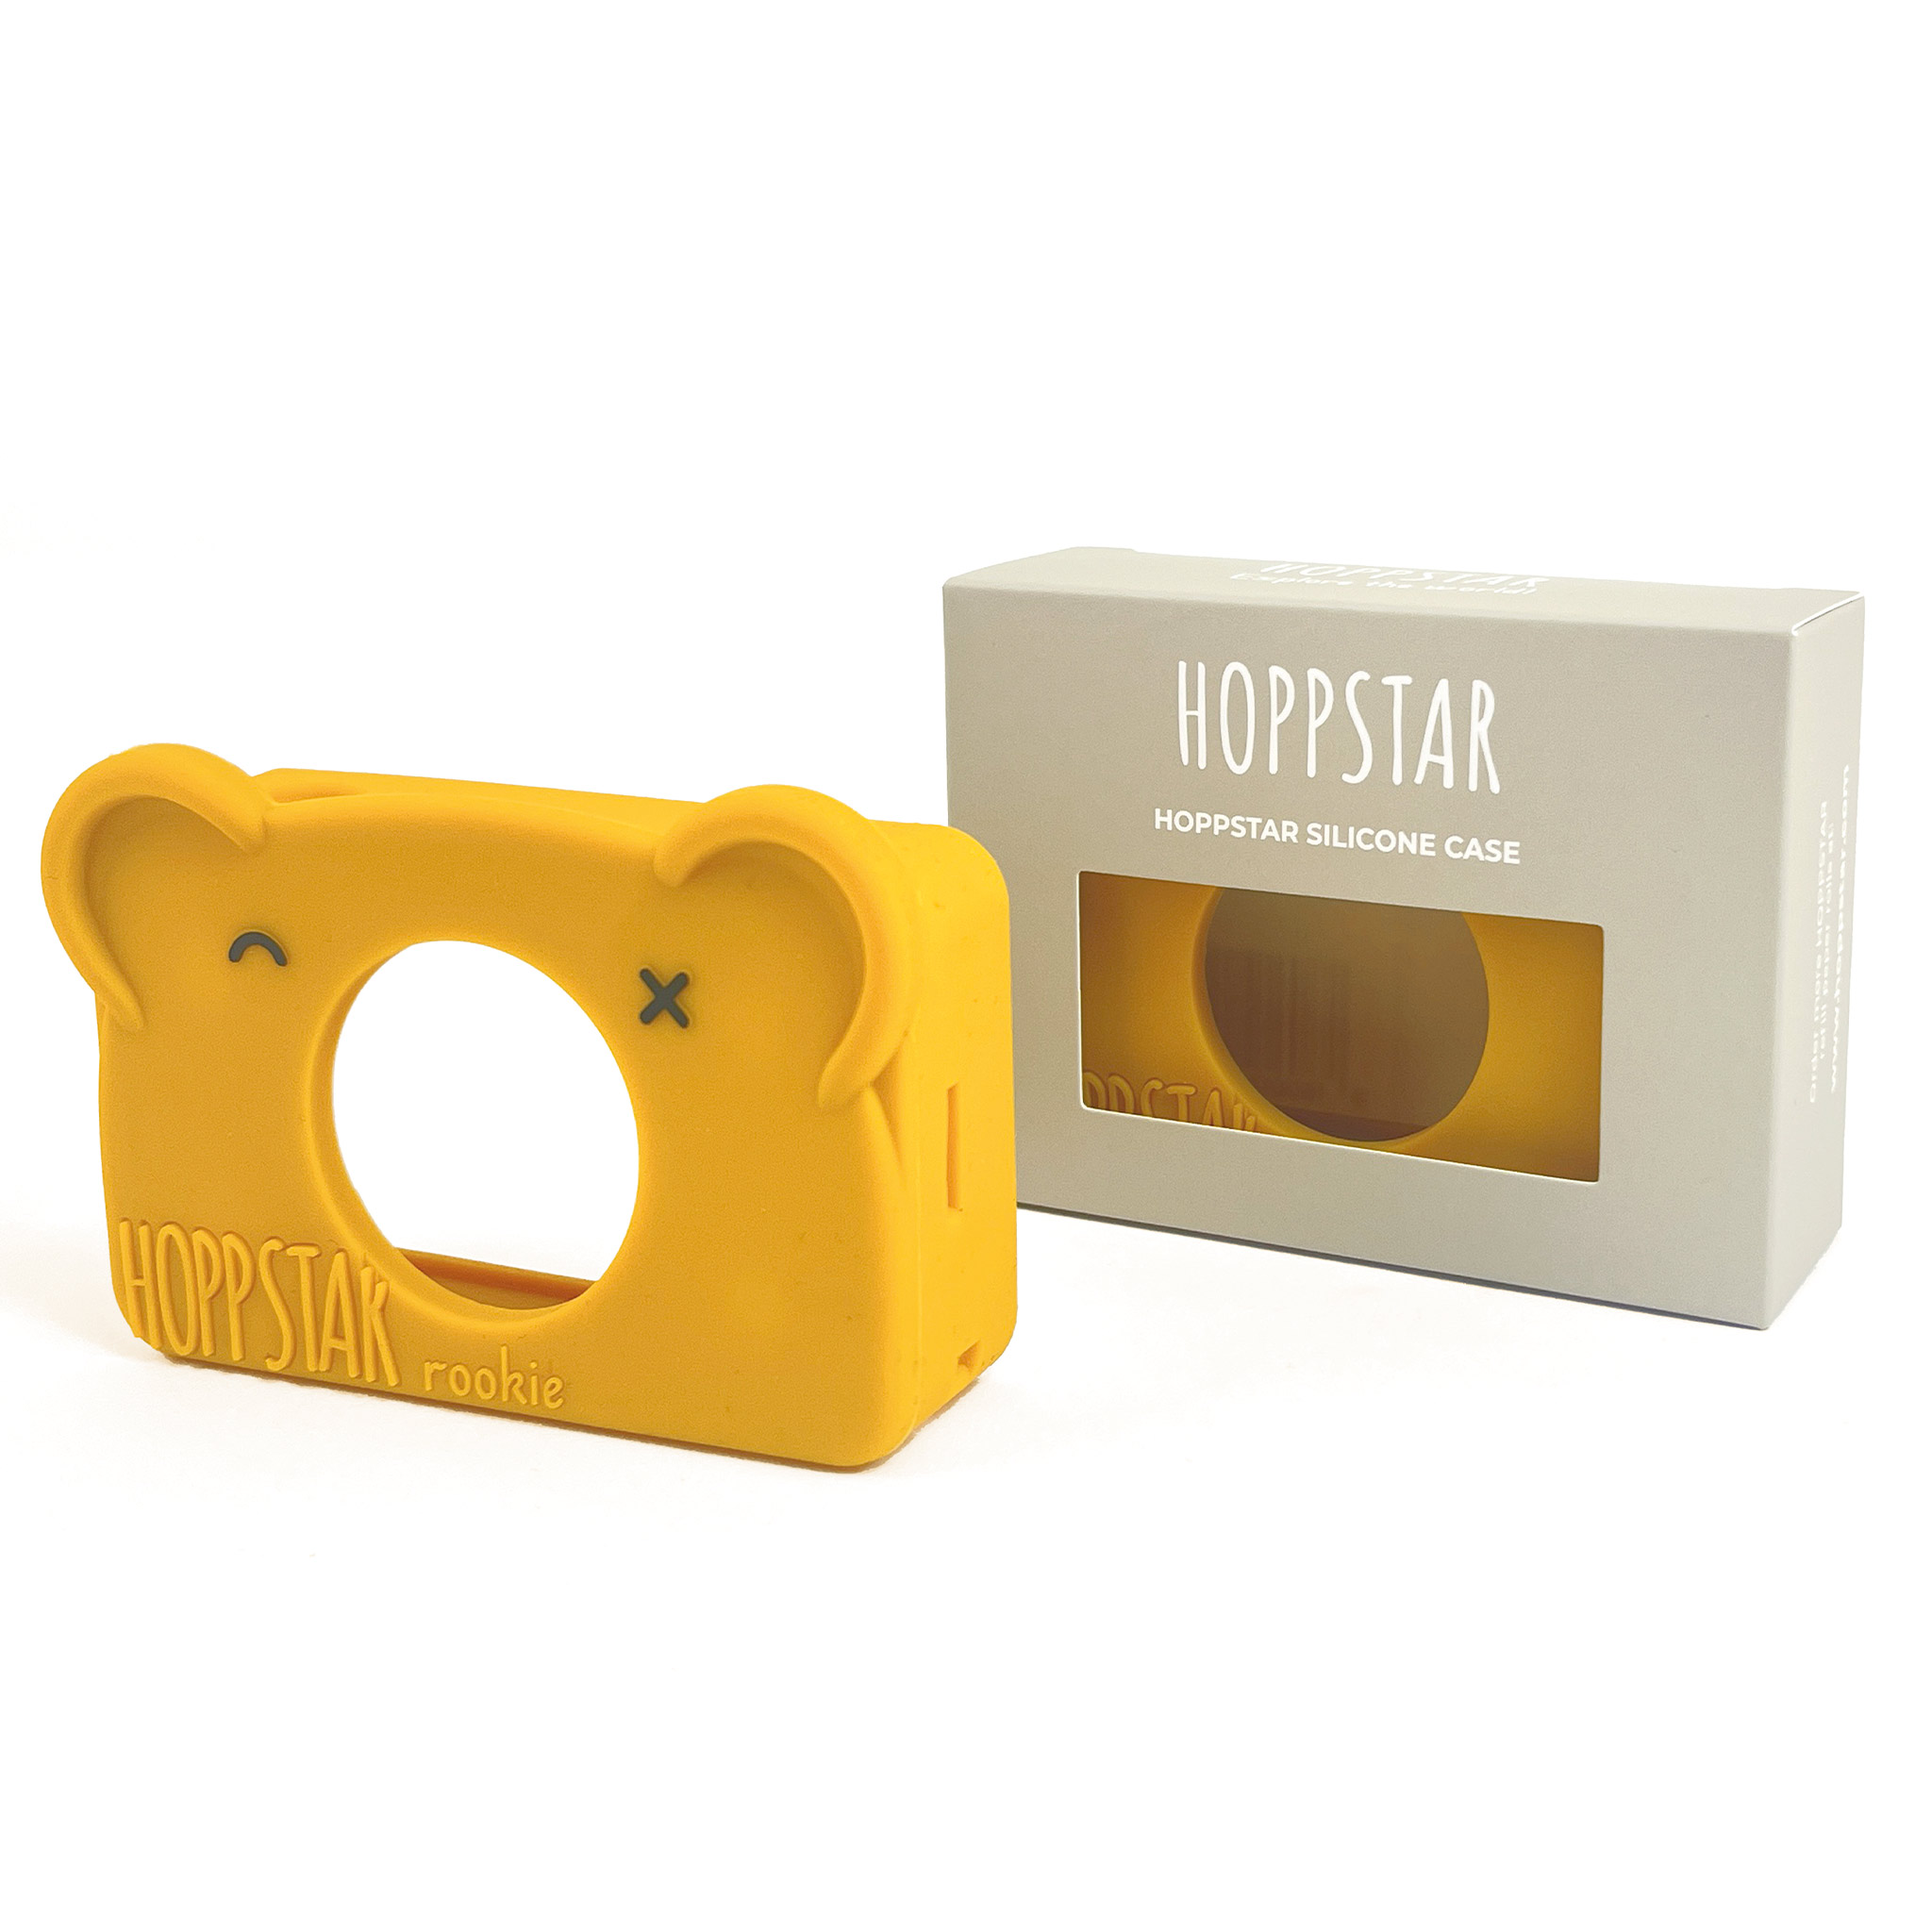 Hoppstar Silikonhülle für Hoppstar Rookie Kinderkamera in Honey (gelb)